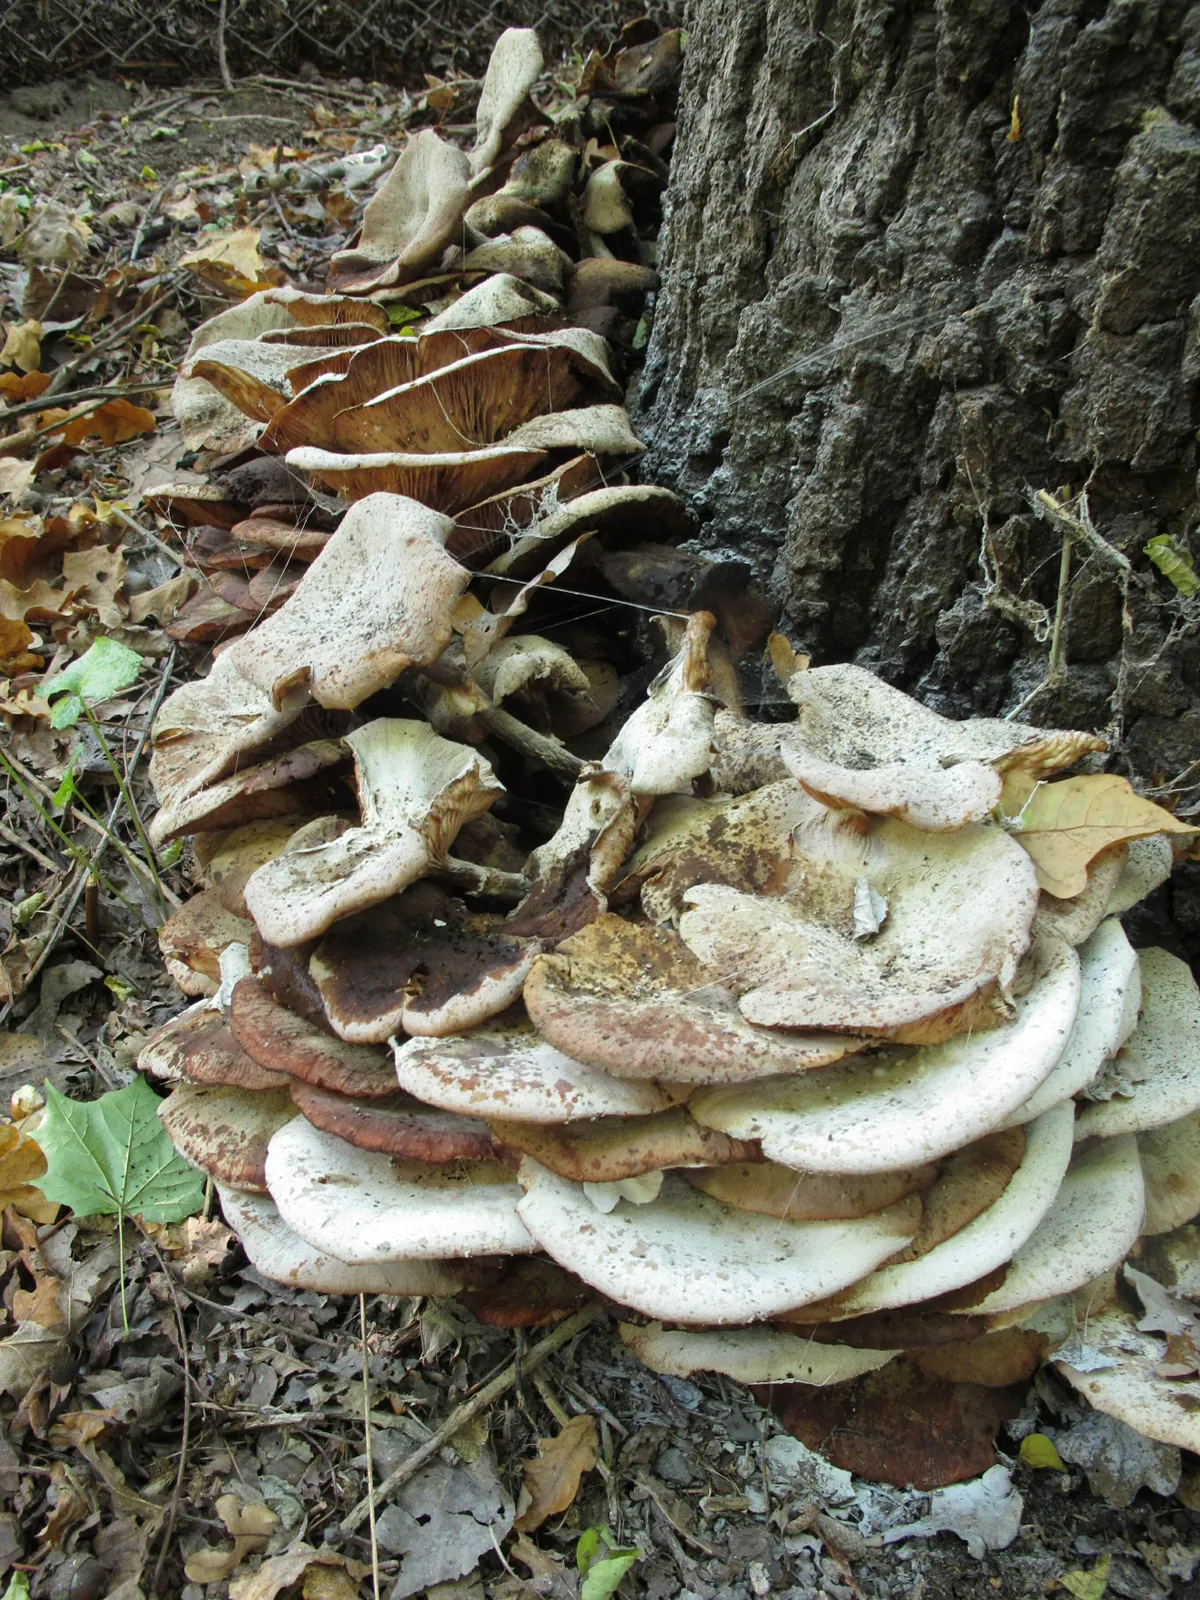 Decaying honey fungus (Armillaria species) on oak tree (Quercus species)